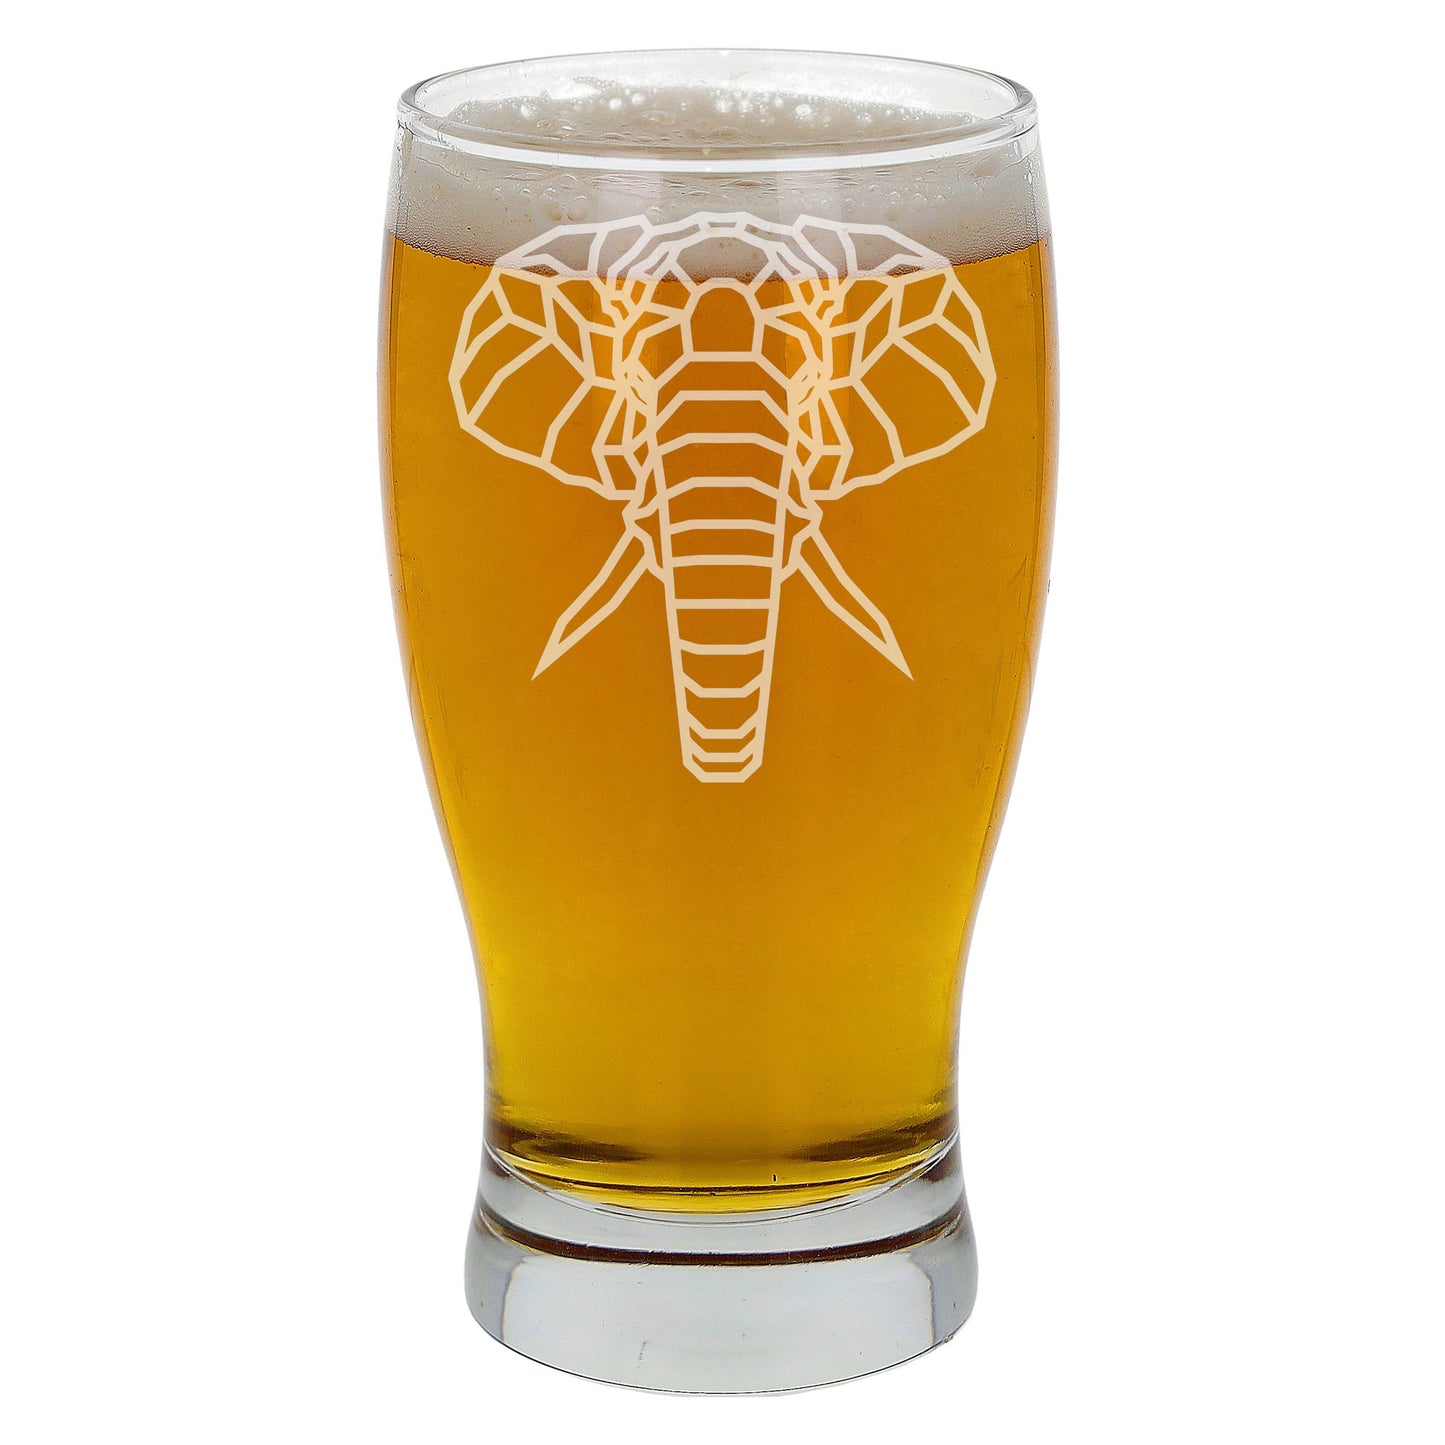 Elephant Engraved Beer Pint Glass  - Always Looking Good -   